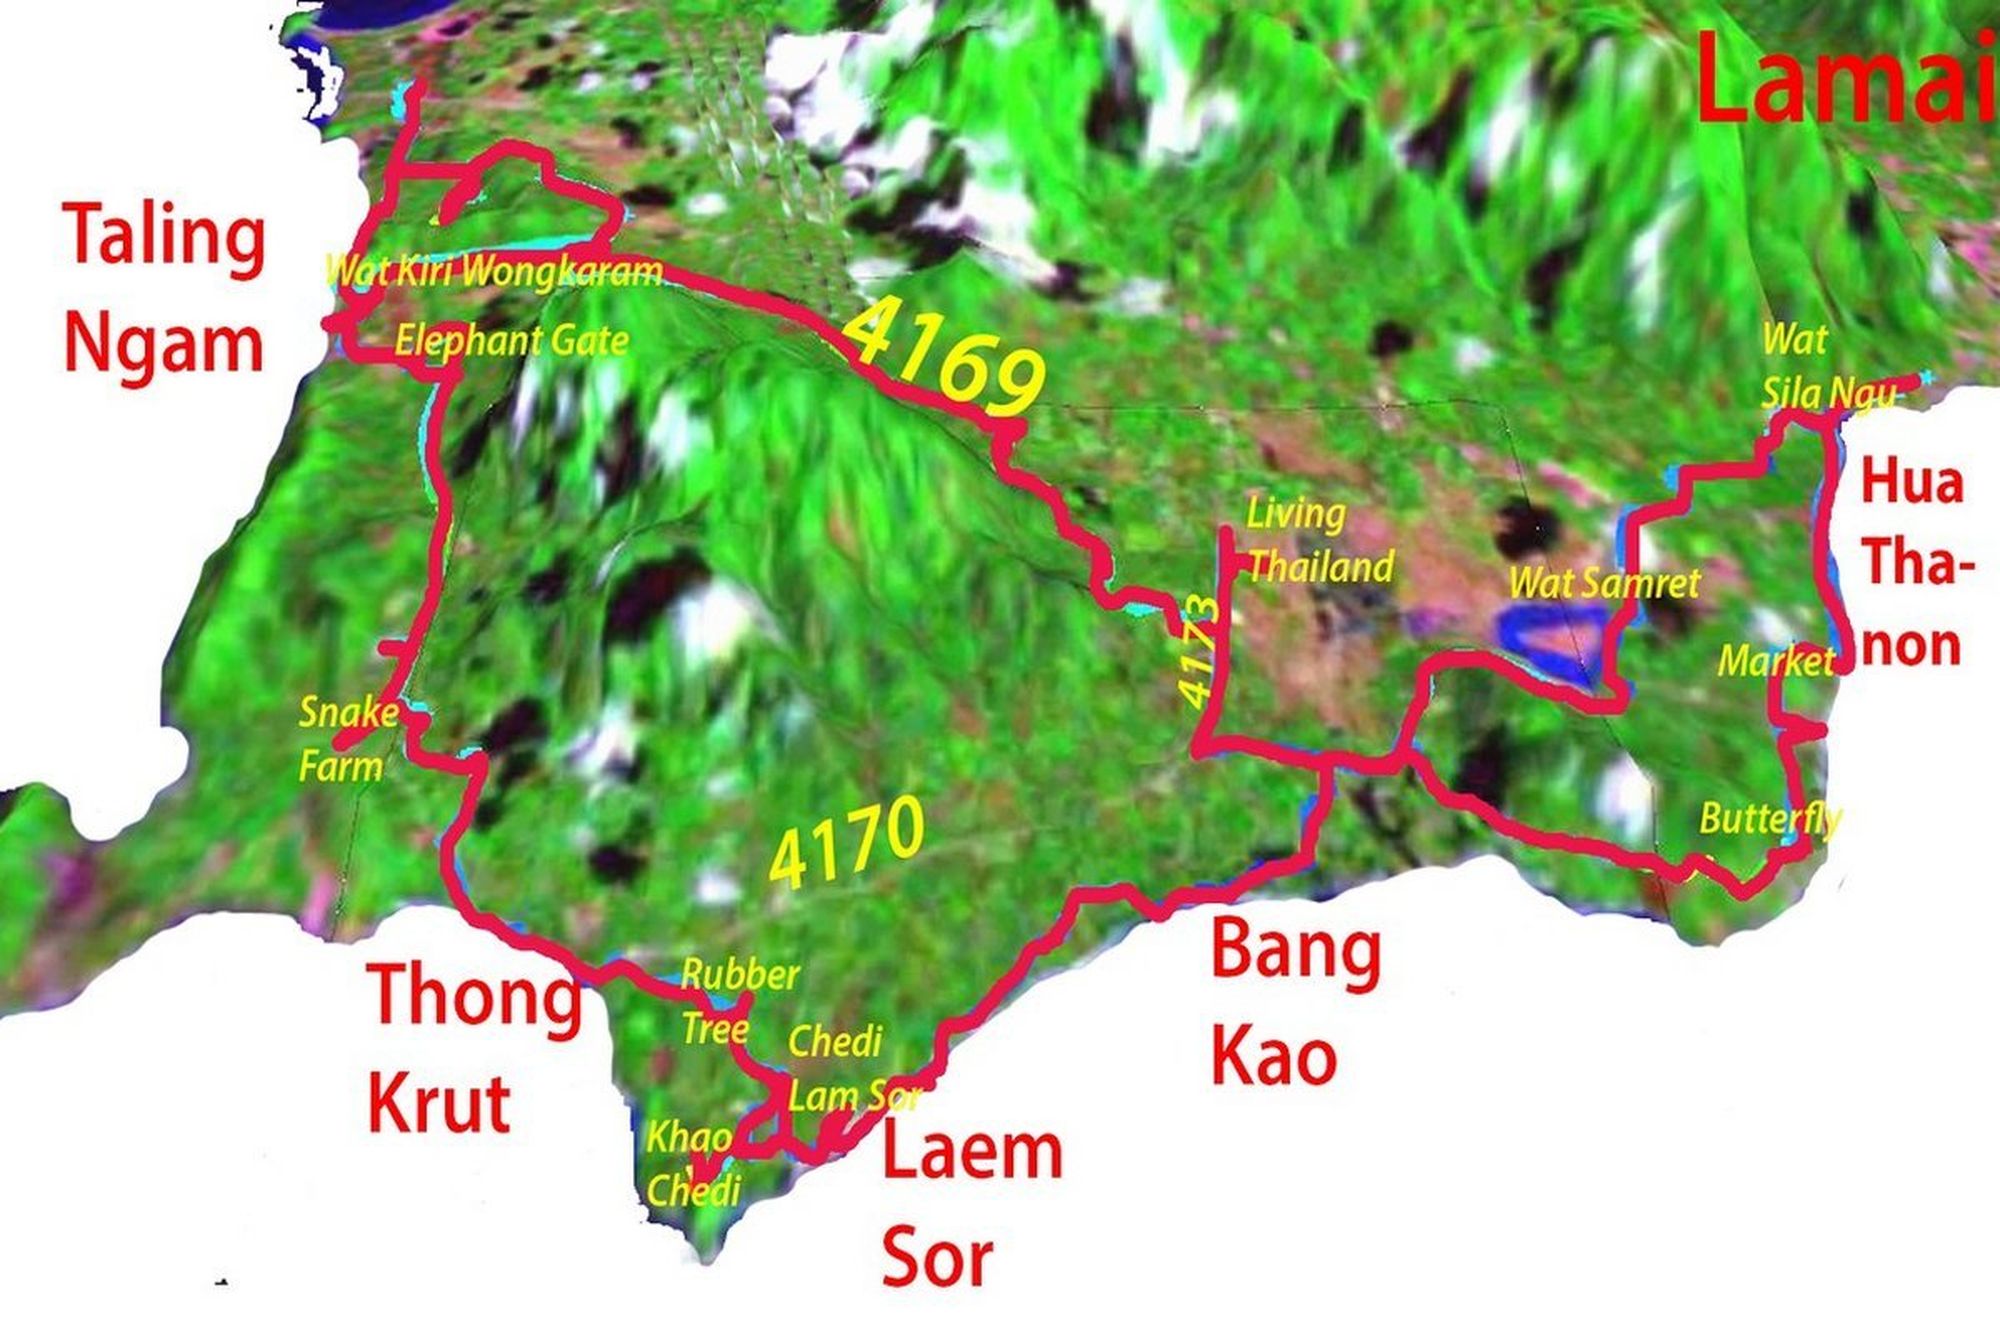 From Lamai through Hua Thanon Bang Kao Laem Sor Thong Krut and back to Lamai.